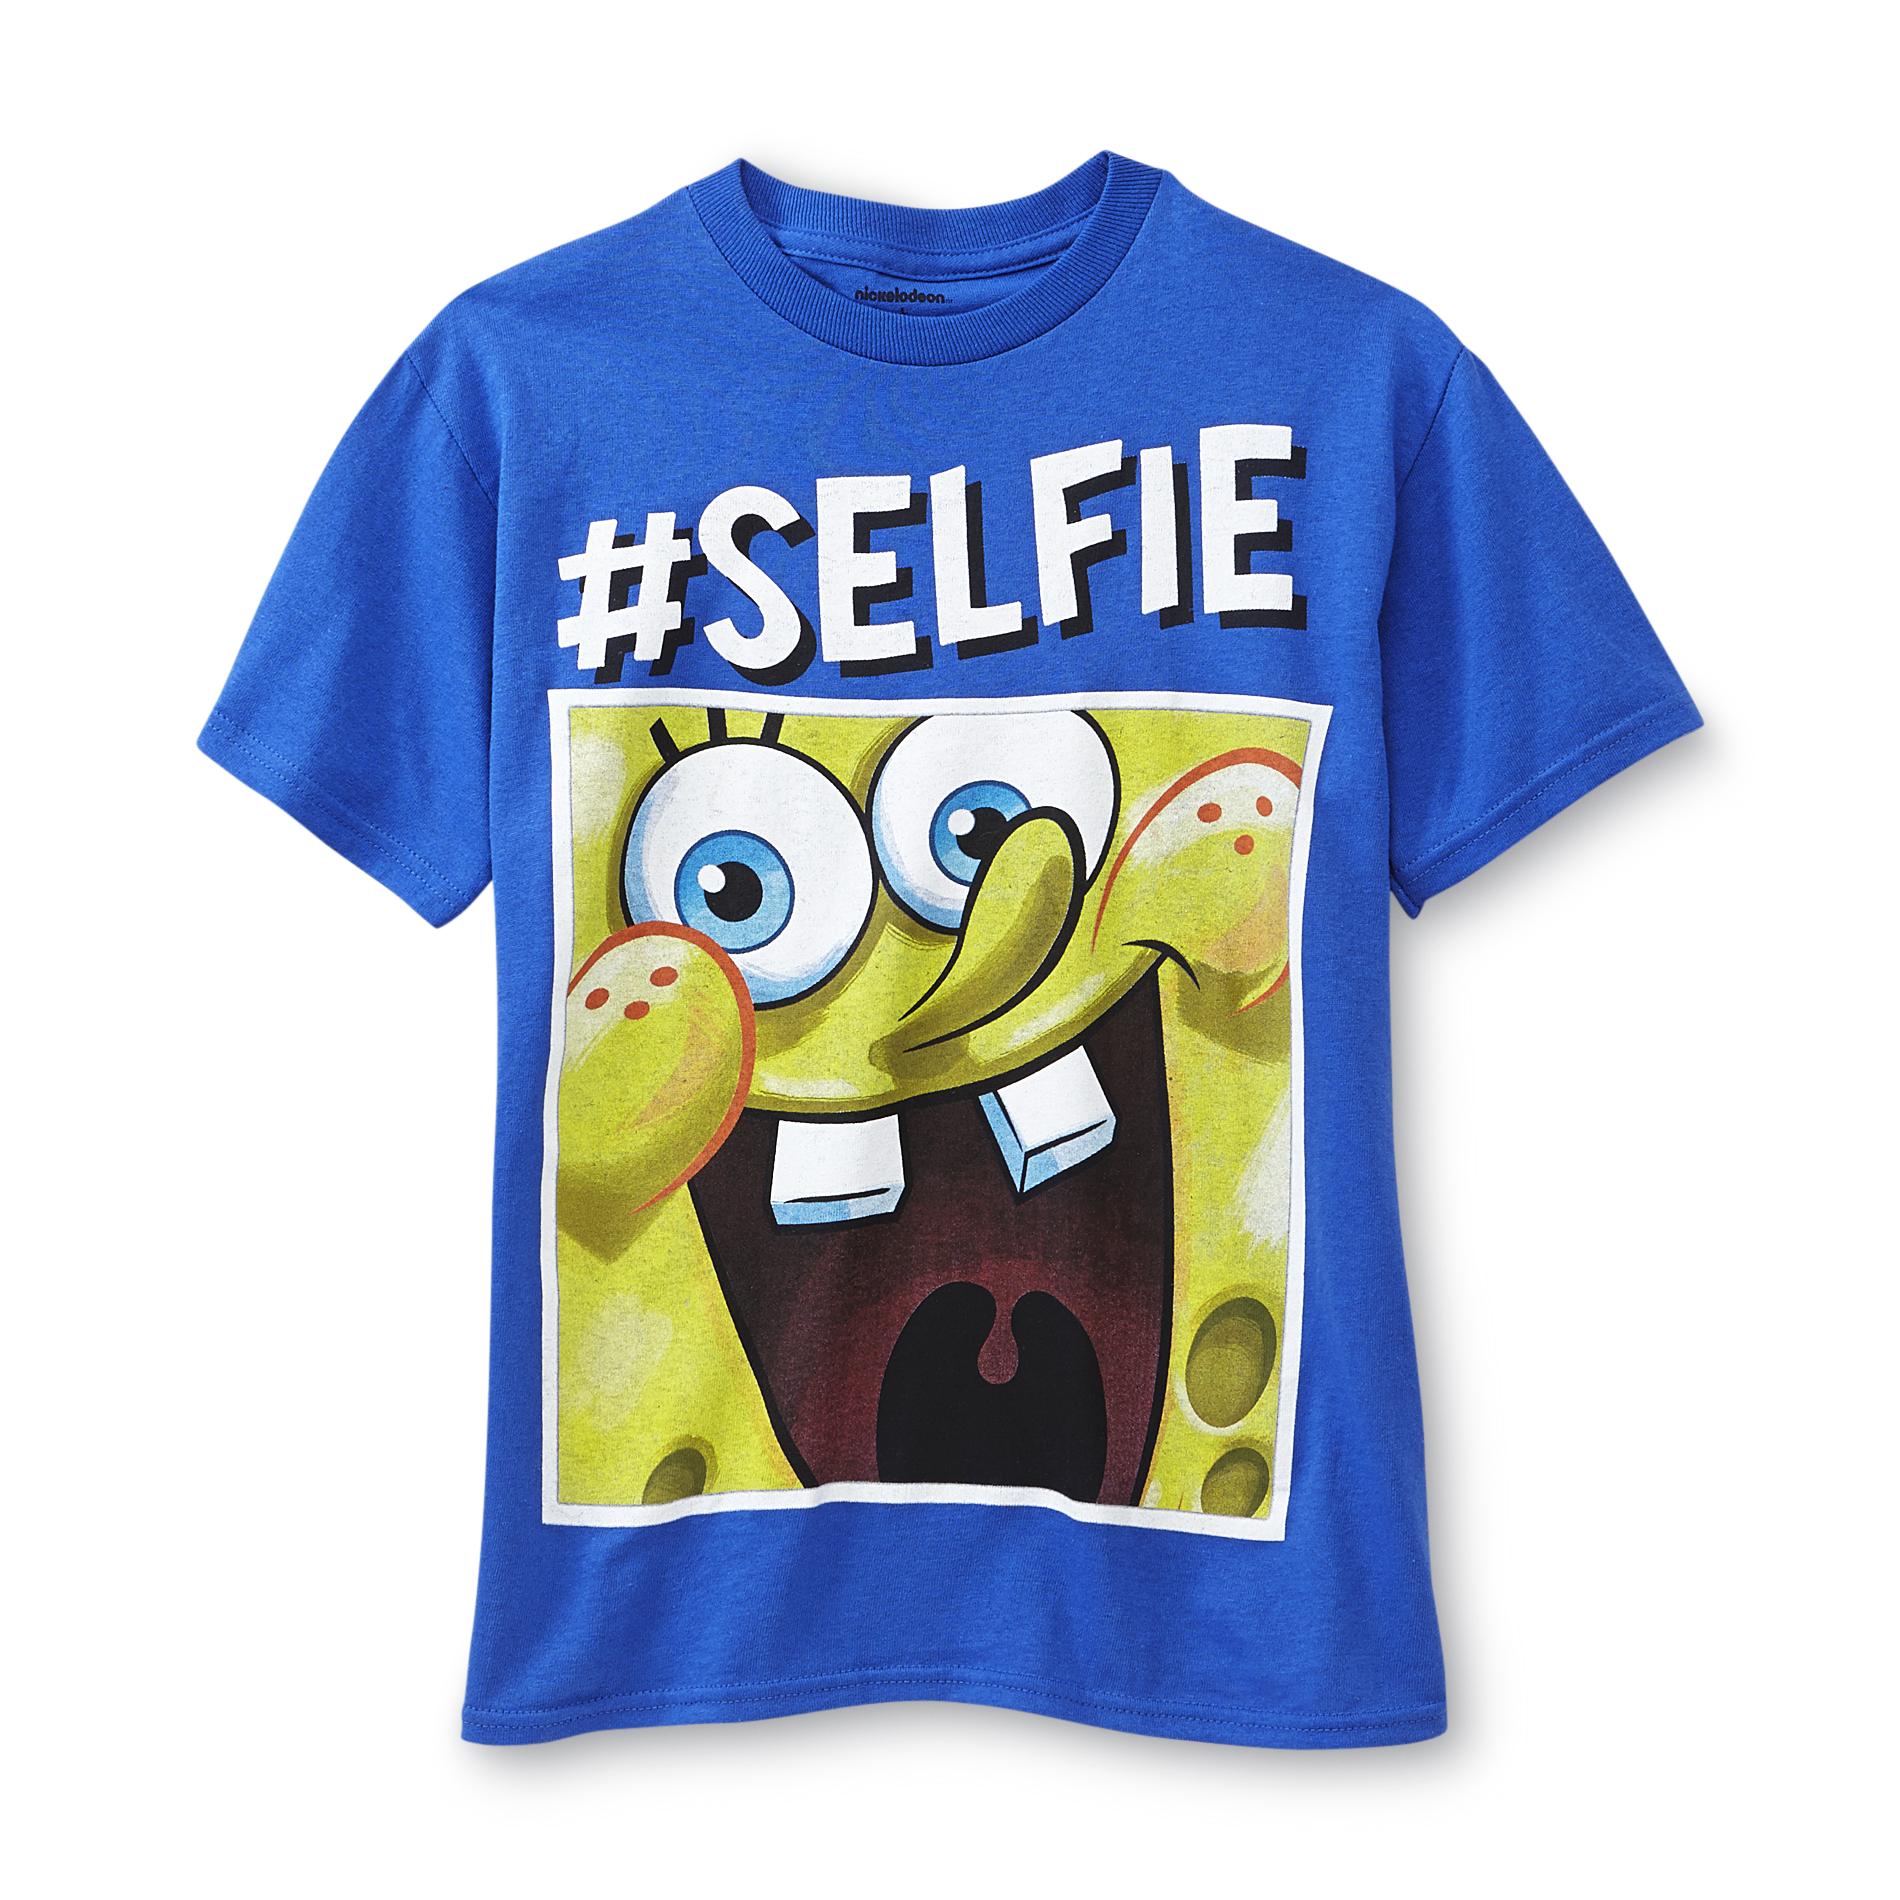 Nickelodeon SpongeBob SquarePants Boy's Graphic T-Shirt - Selfie